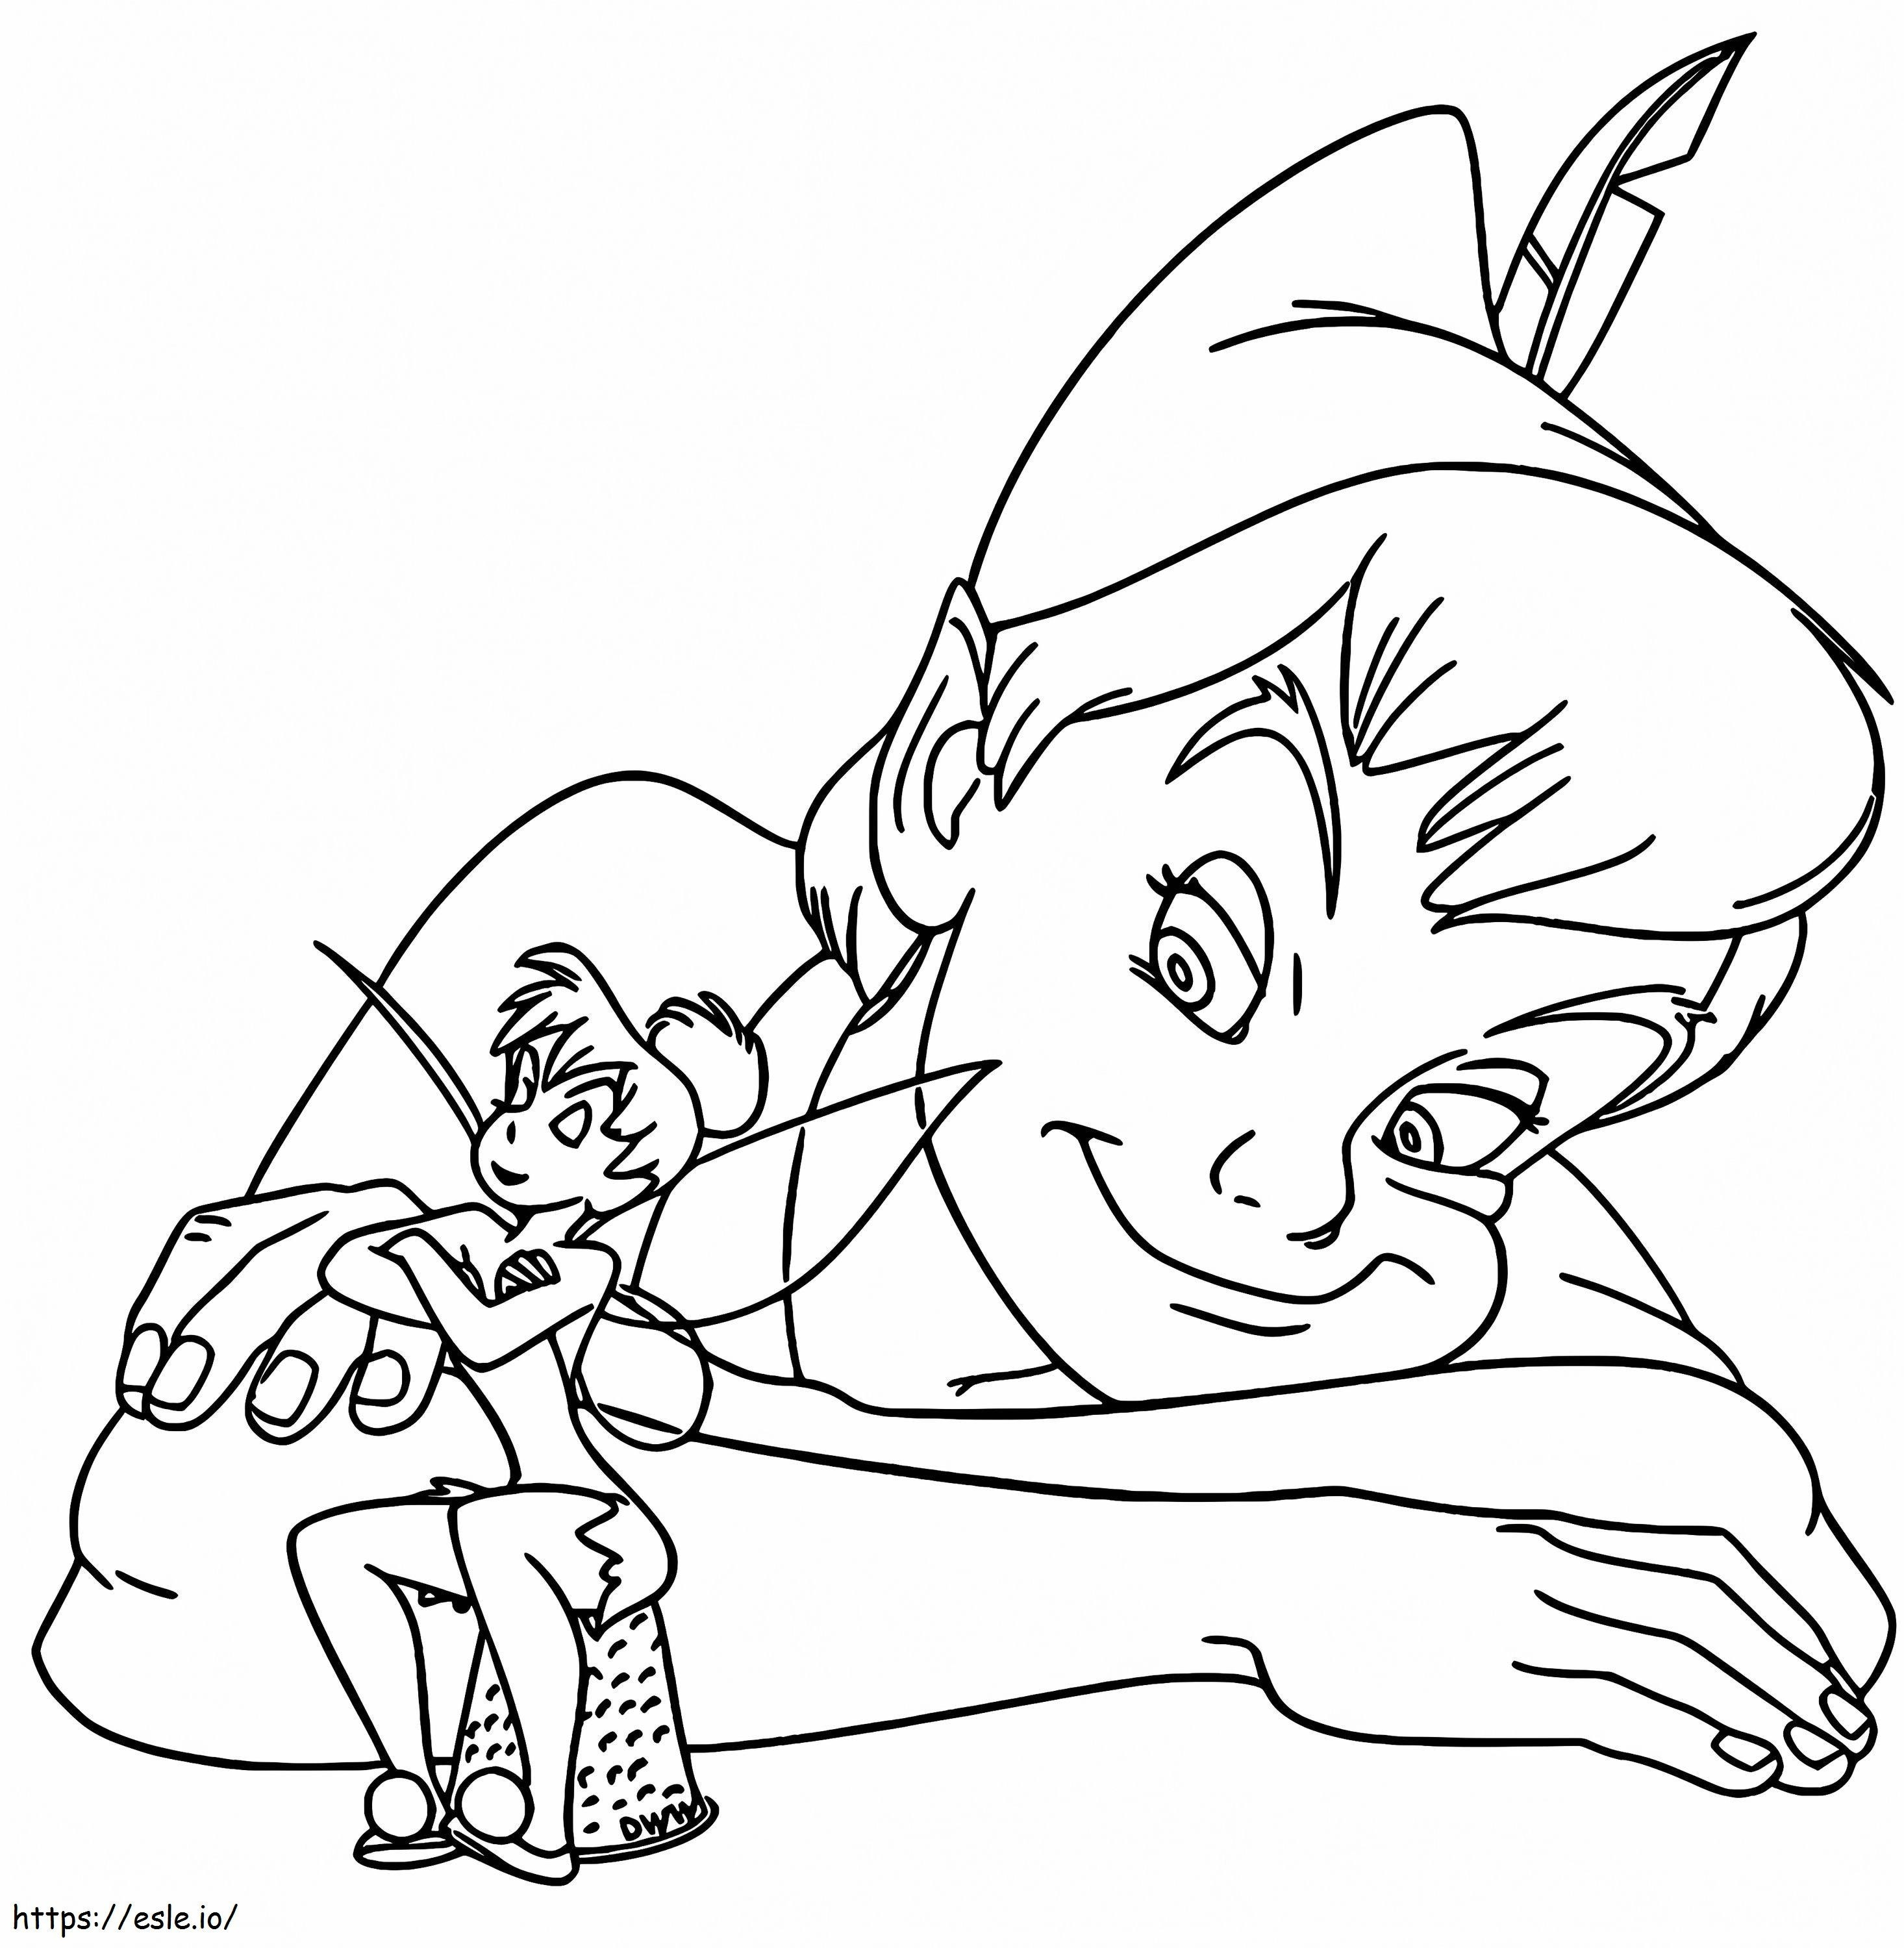 1545725905 Tinkerbell'in Renkli Resmi Geçerli Tinkerbell'in Renkli Resmi Peter Pan'ın Geçerli Resmi Ve Tinkerbell'in Renkli Resmi boyama